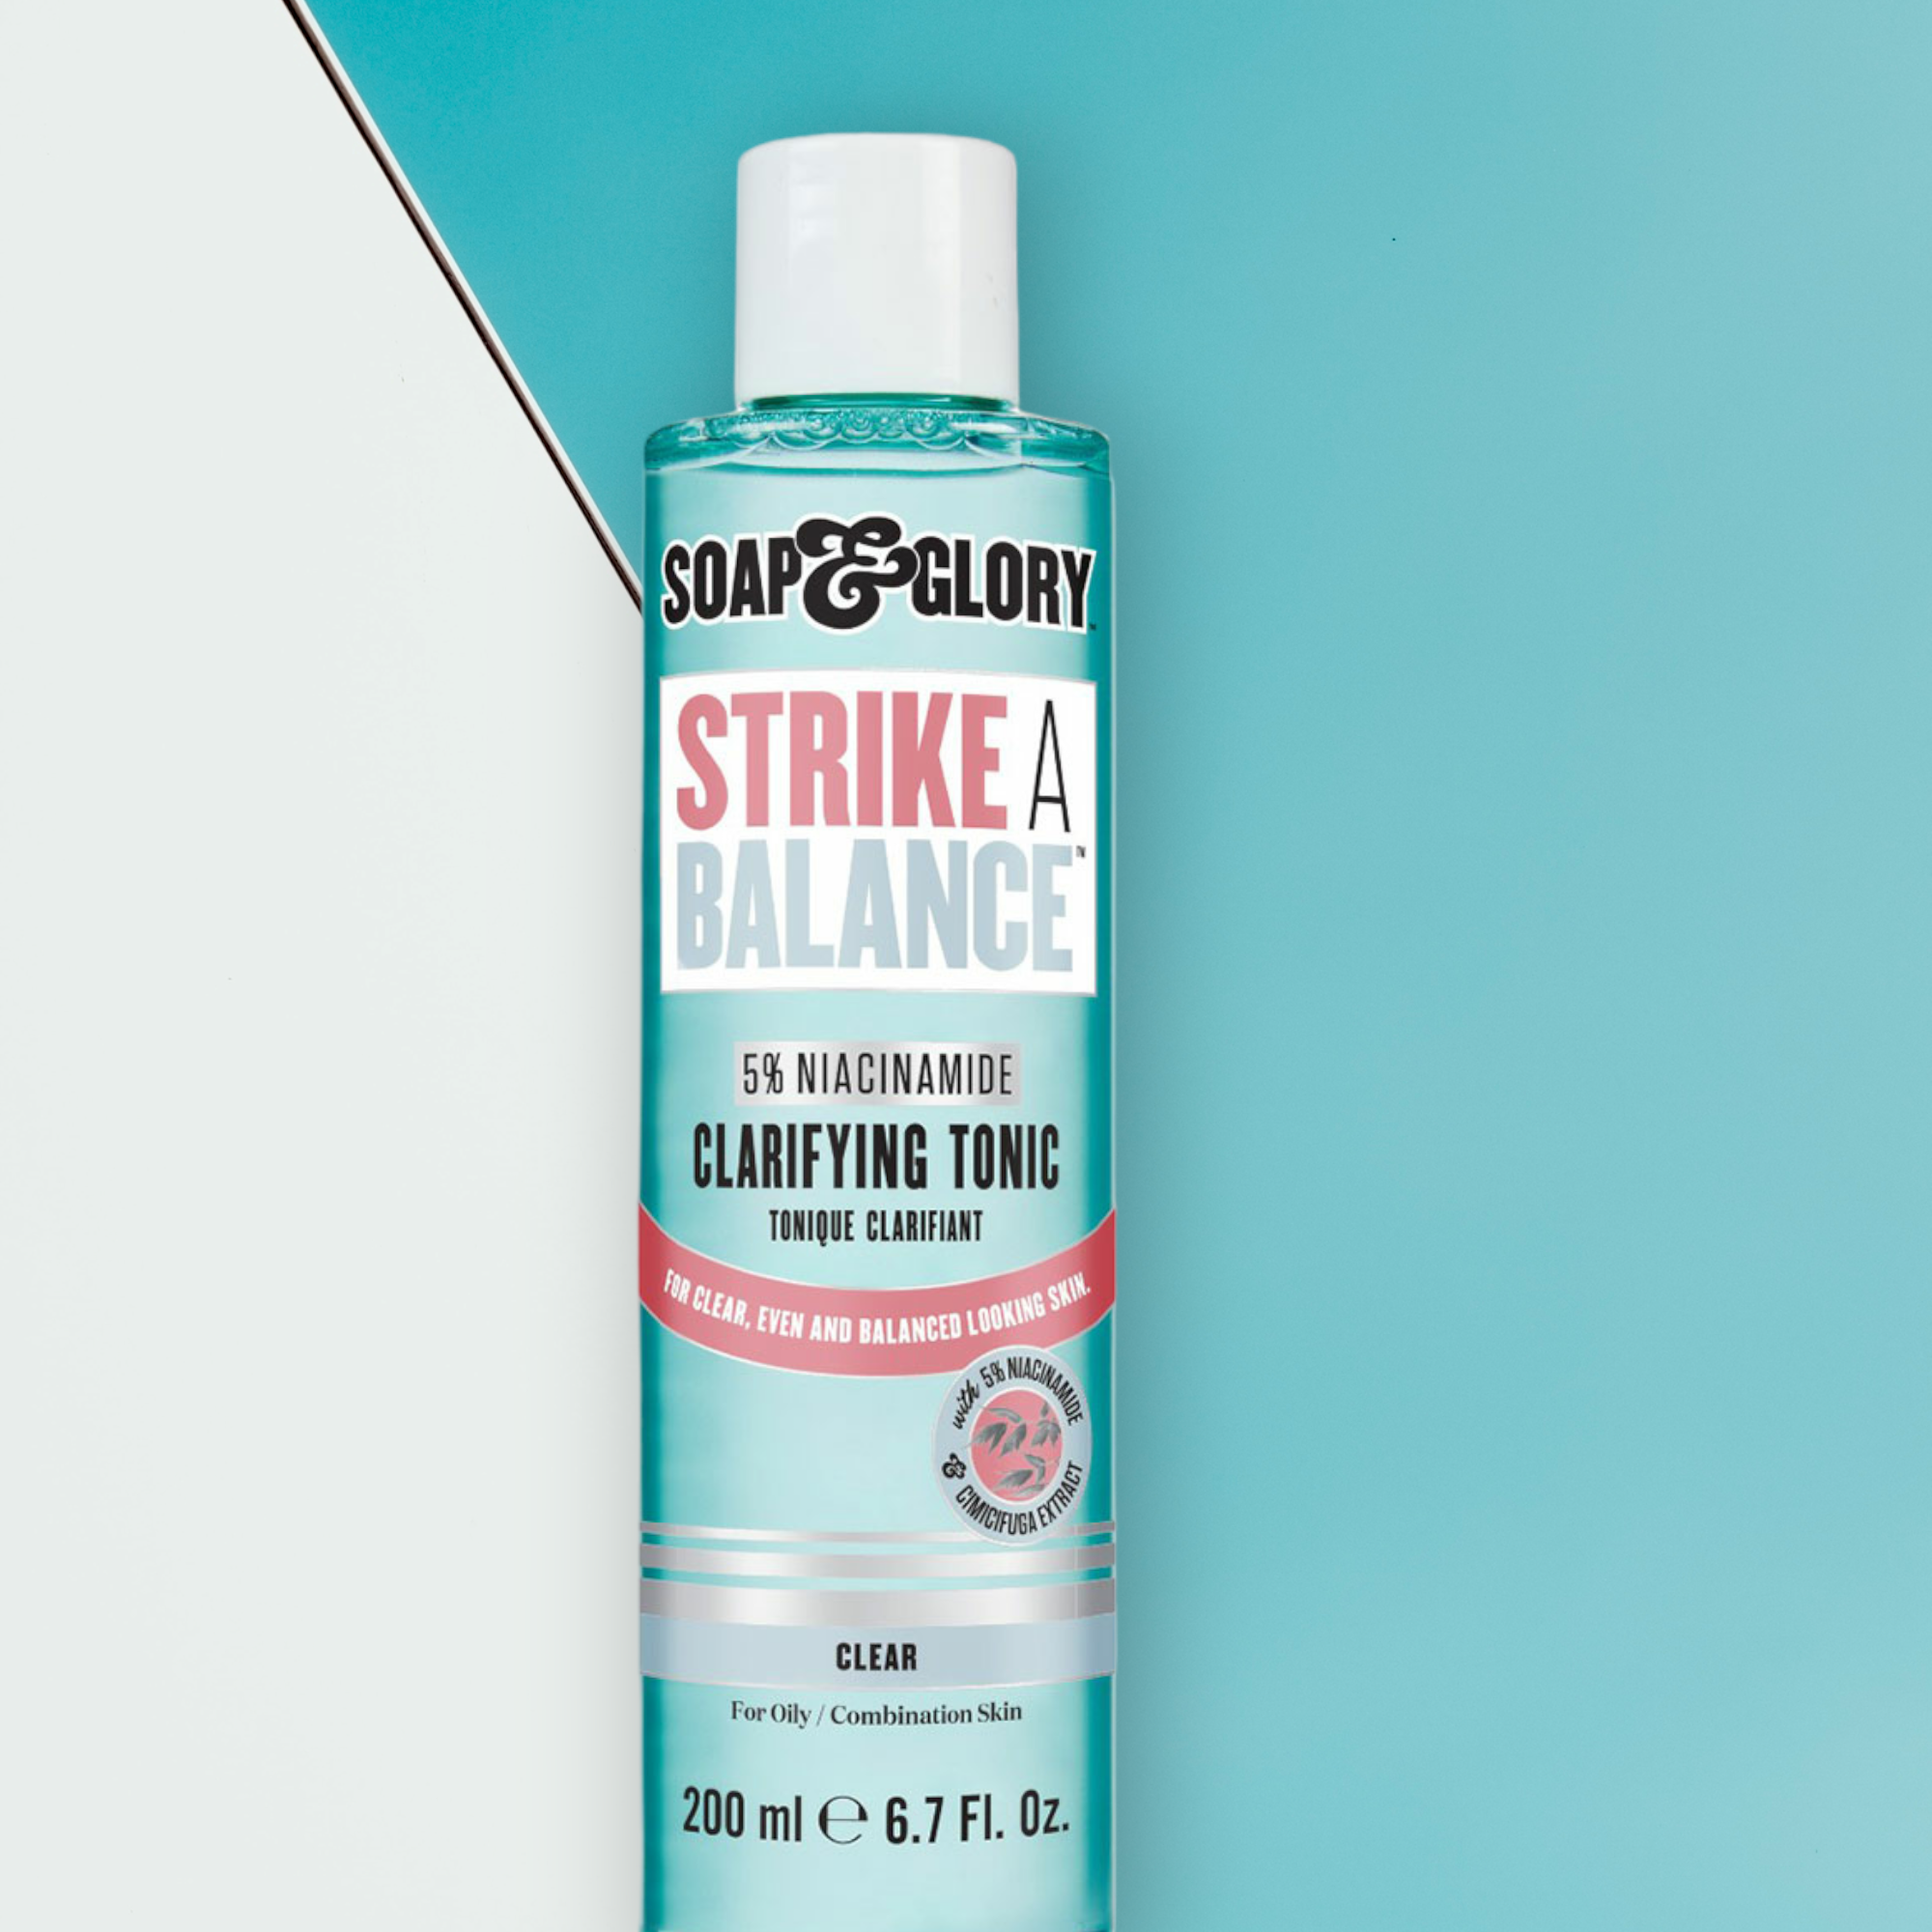 soap-glory-strike-a-balance-5-niacinamide-clarifying-tonic-200ml